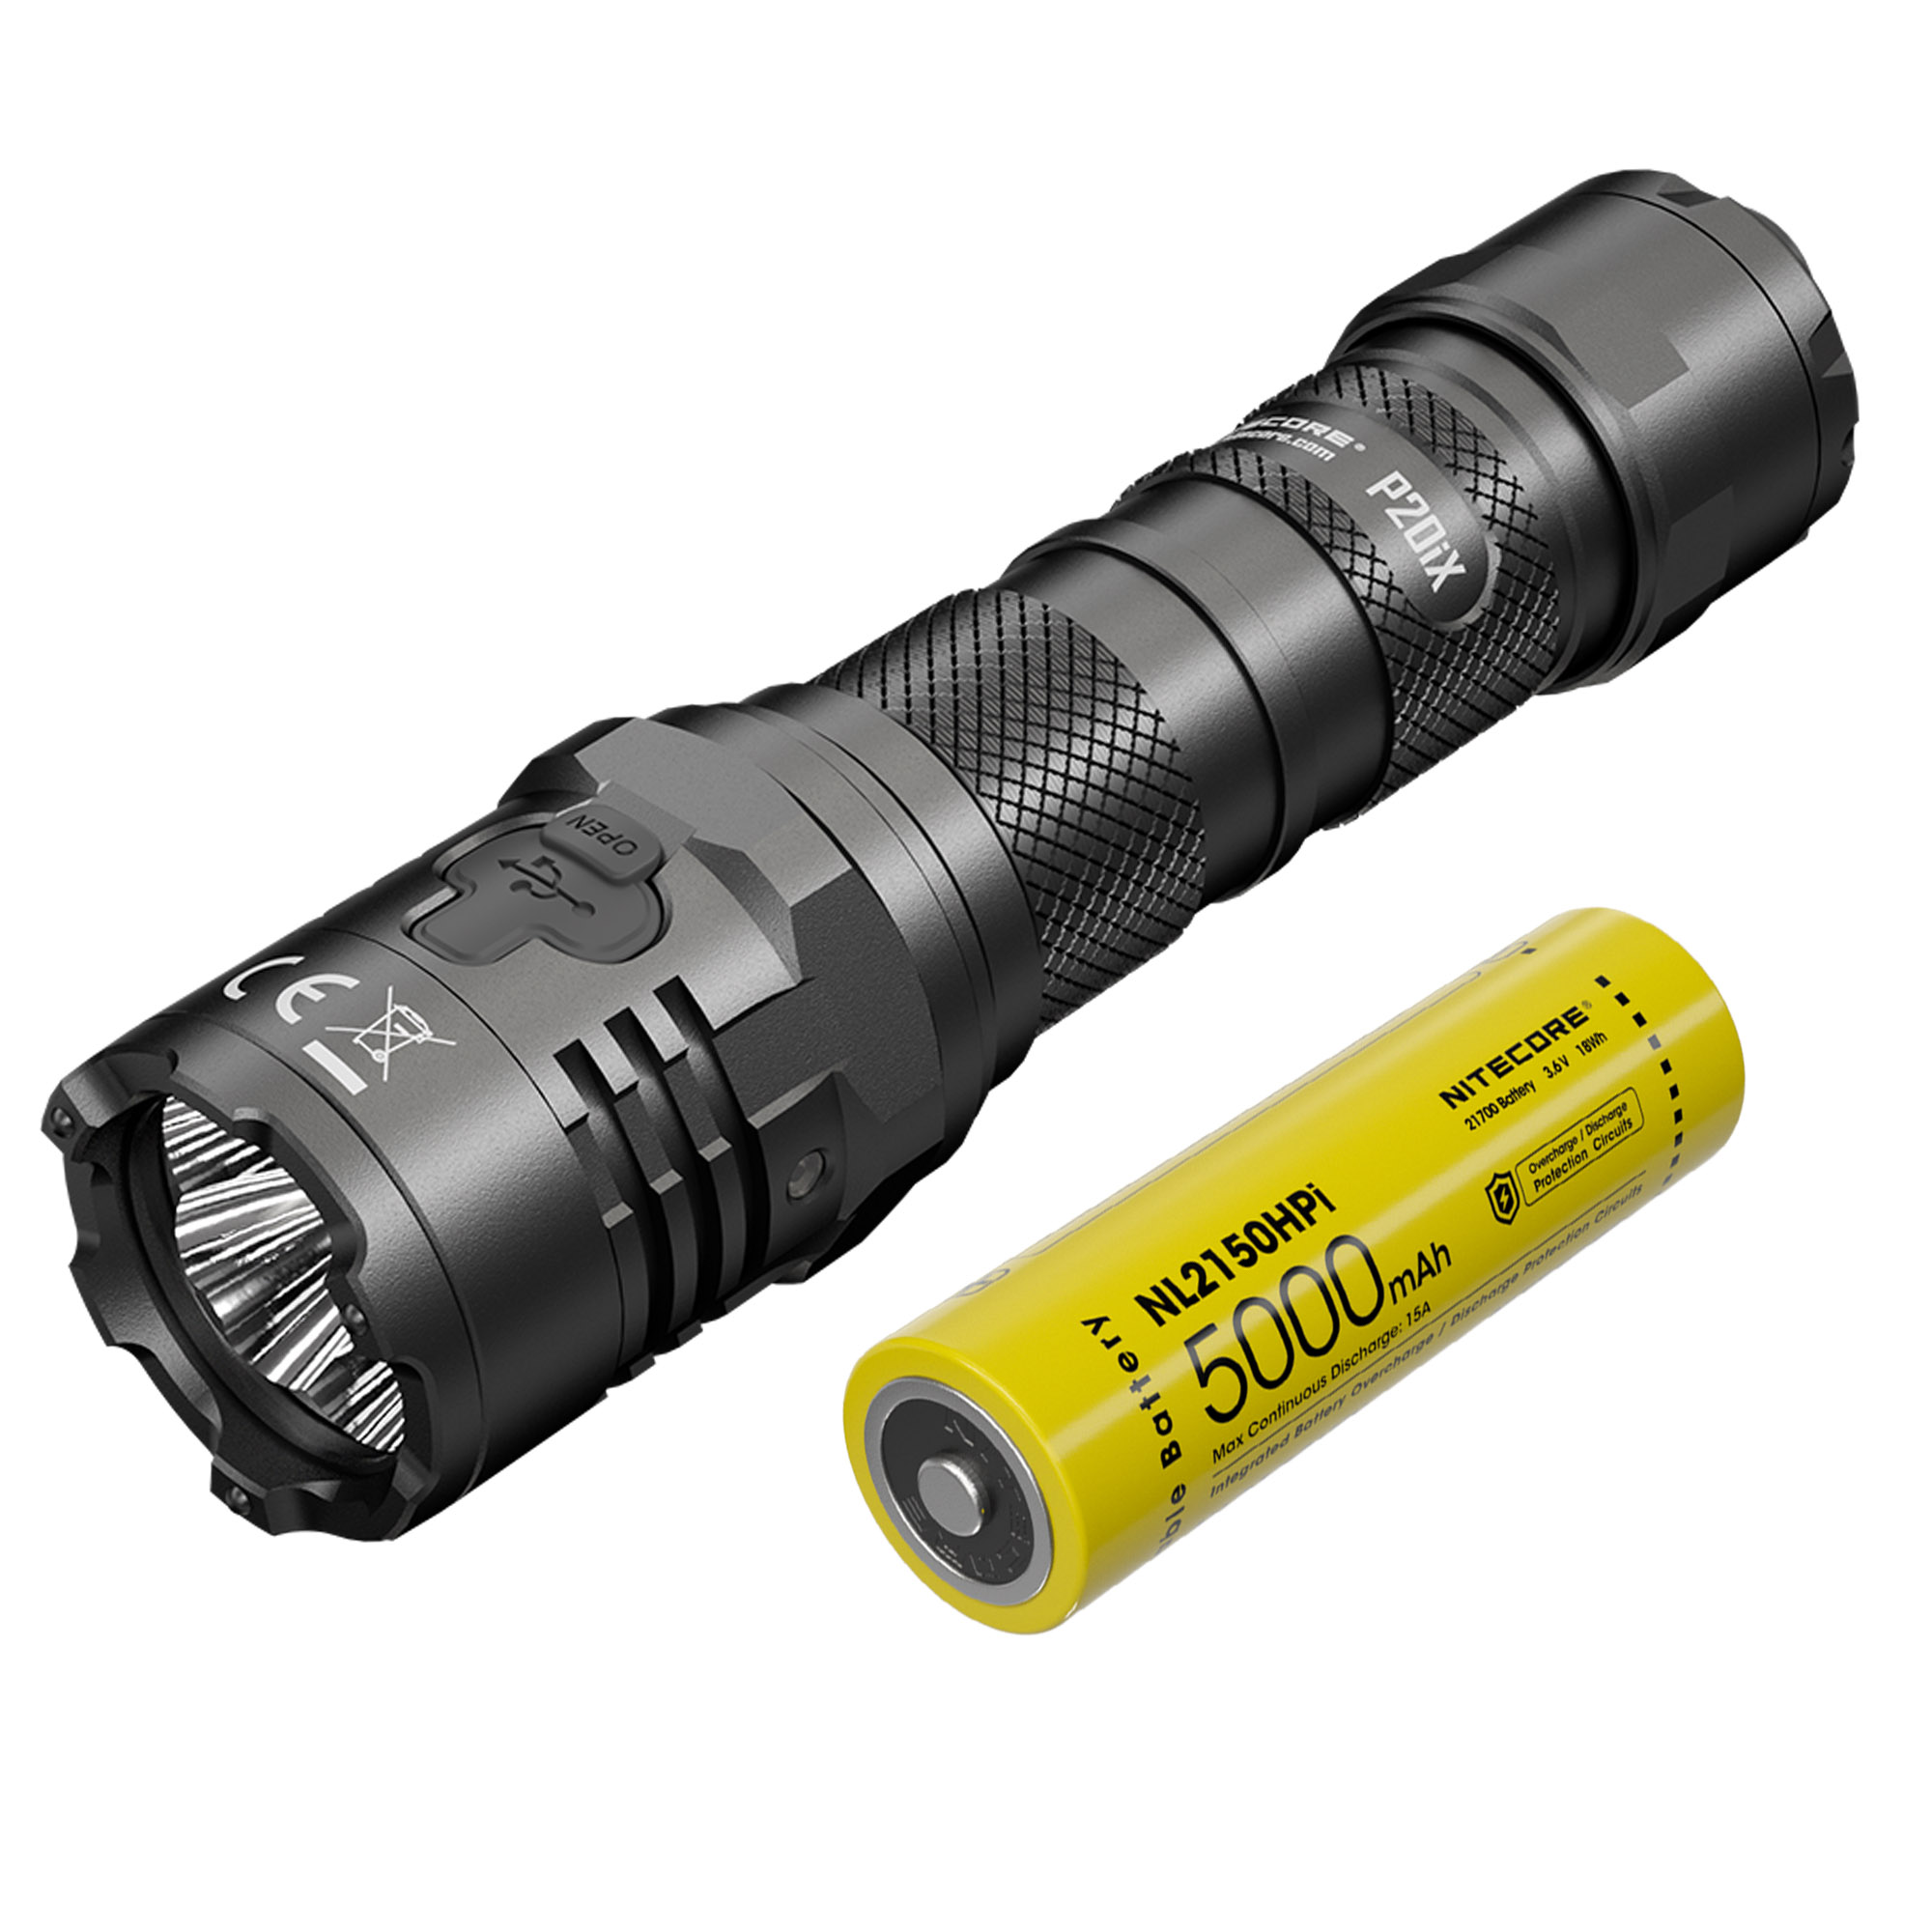 Nitecore P20iX 4000 Lumen USB-C Rechargeable Flashlight